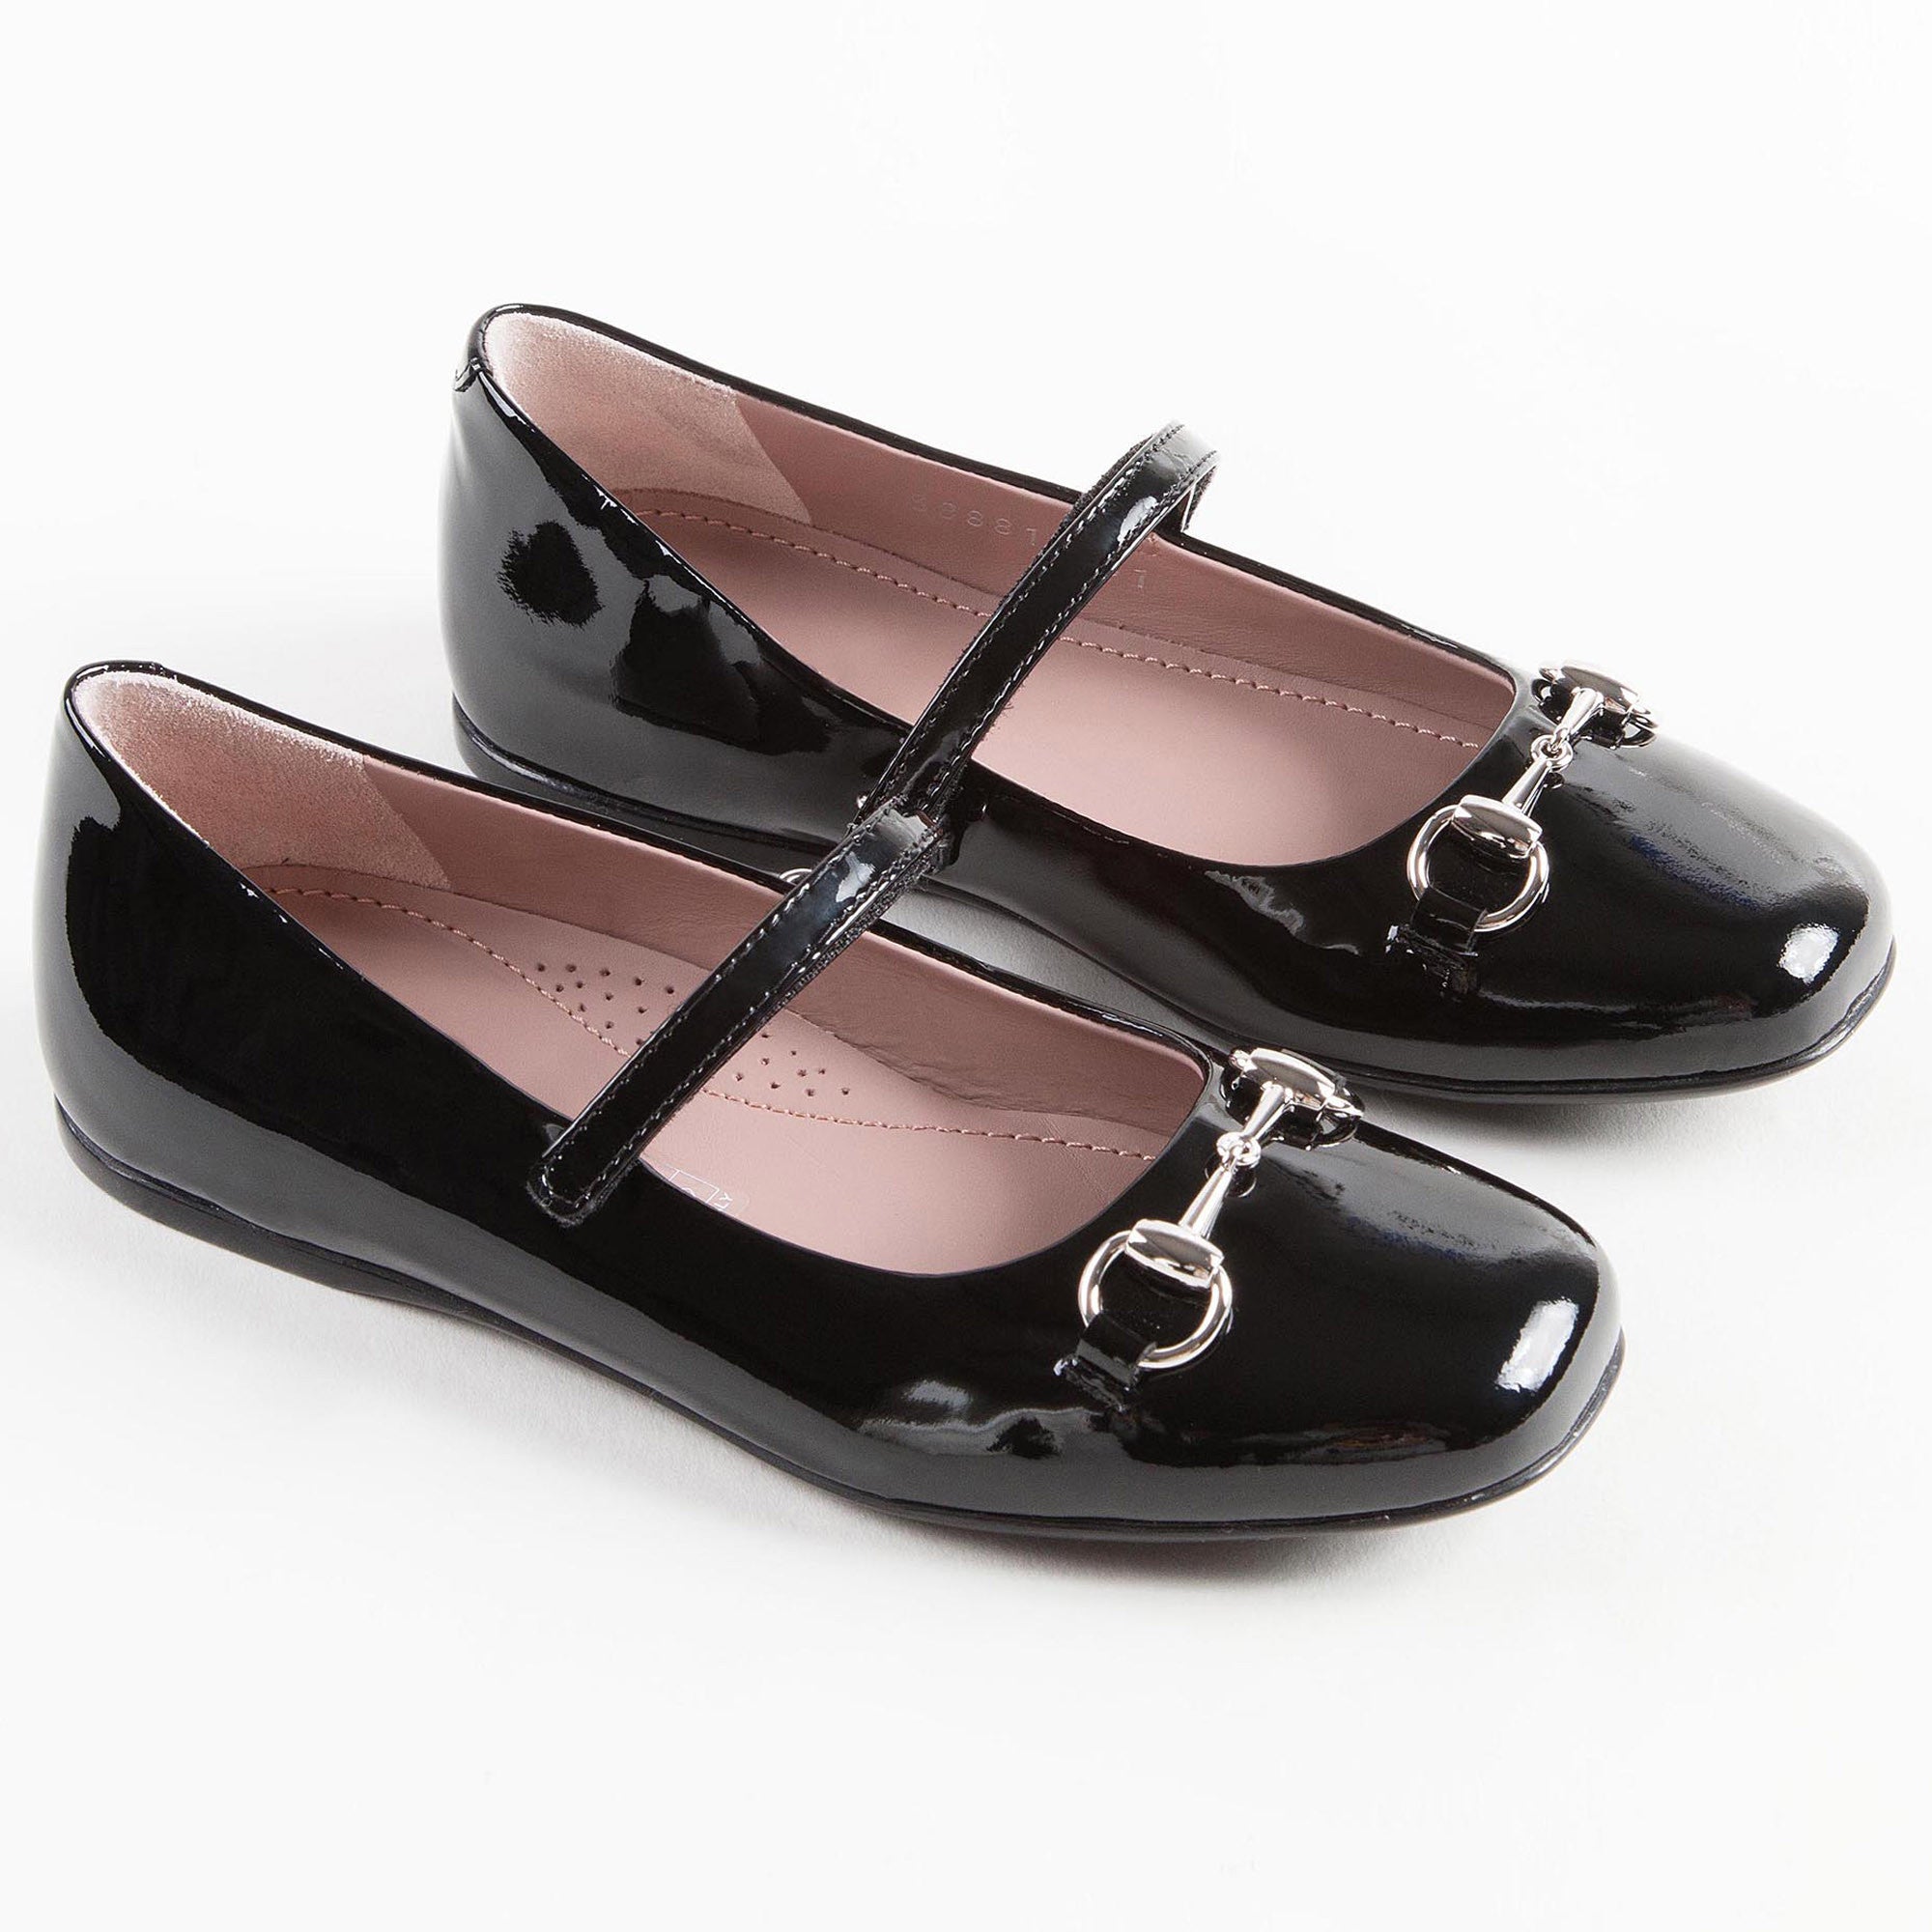 Girls Black Patent Leather Shoes With Horsebit - CÉMAROSE | Children's Fashion Store - 1